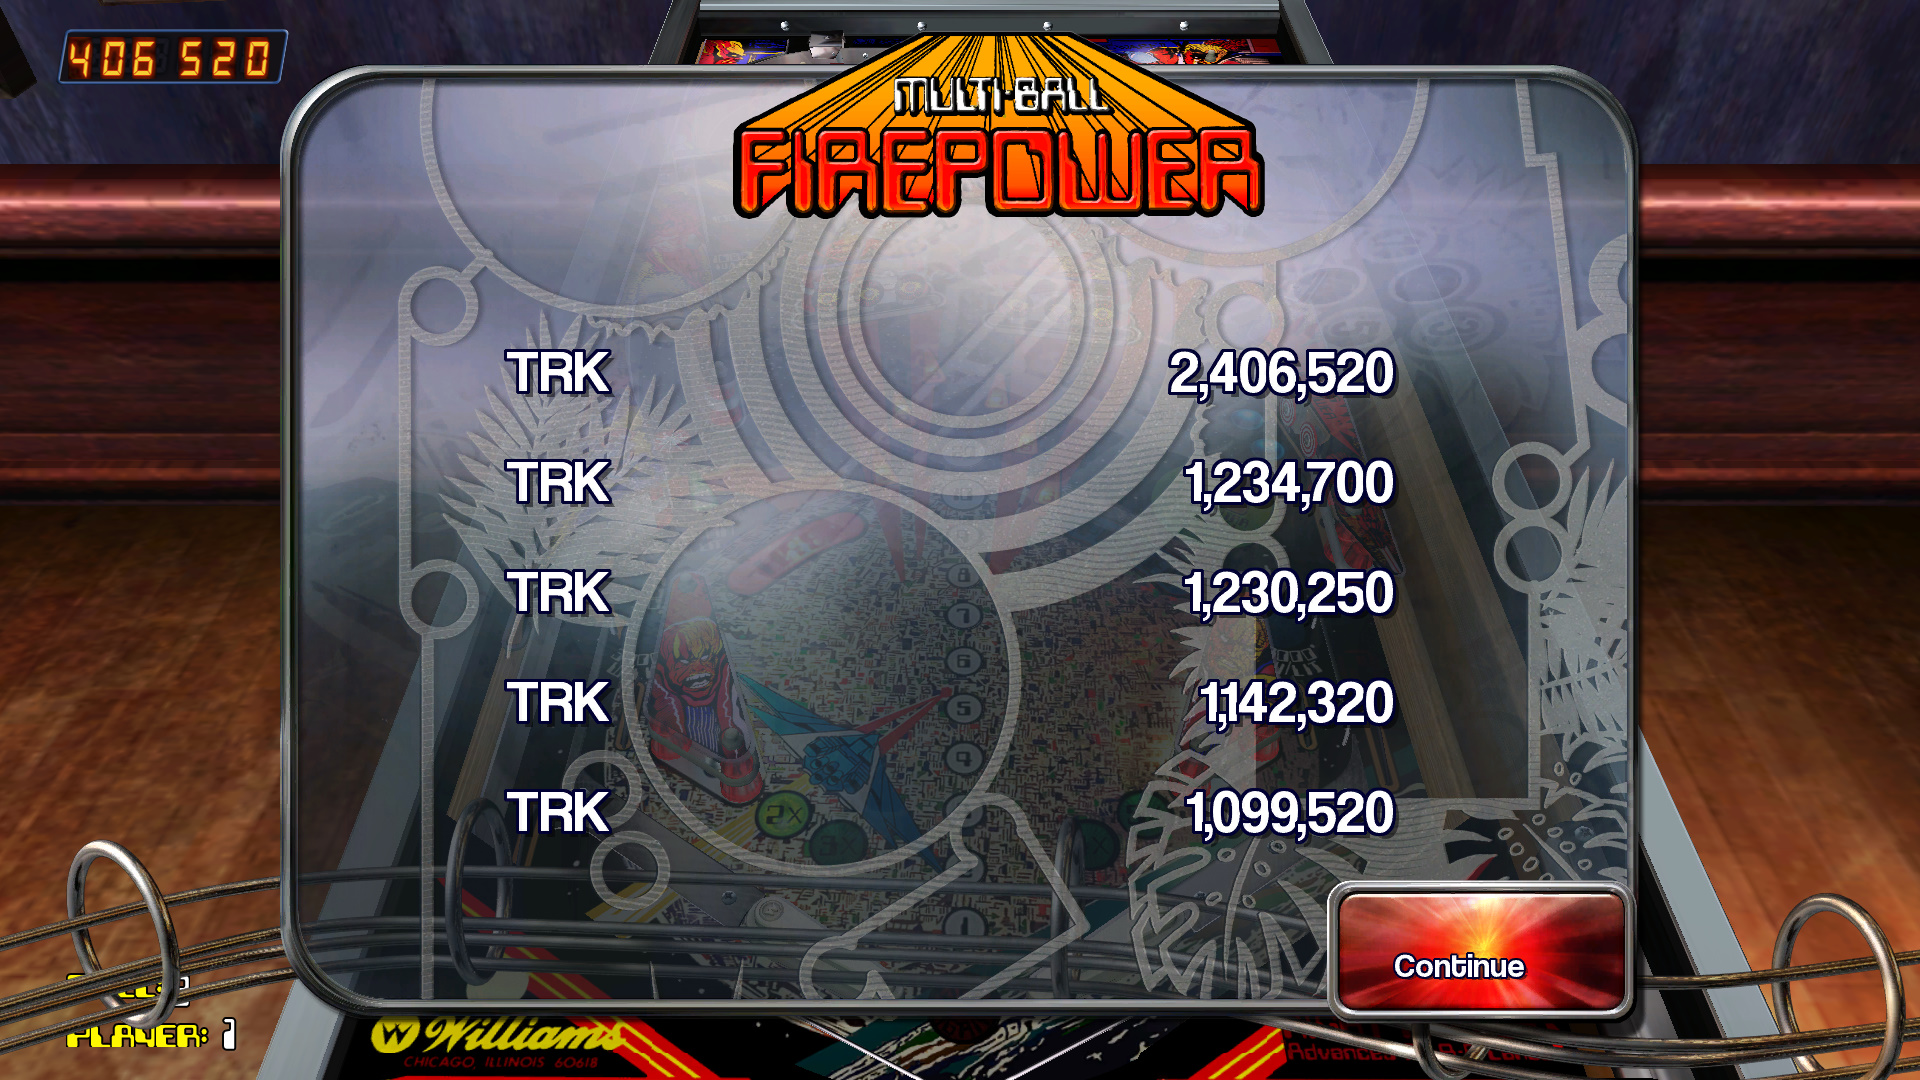 TheTrickster: Pinball Arcade: Firepower (PC) 2,406,520 points on 2015-09-18 06:40:14